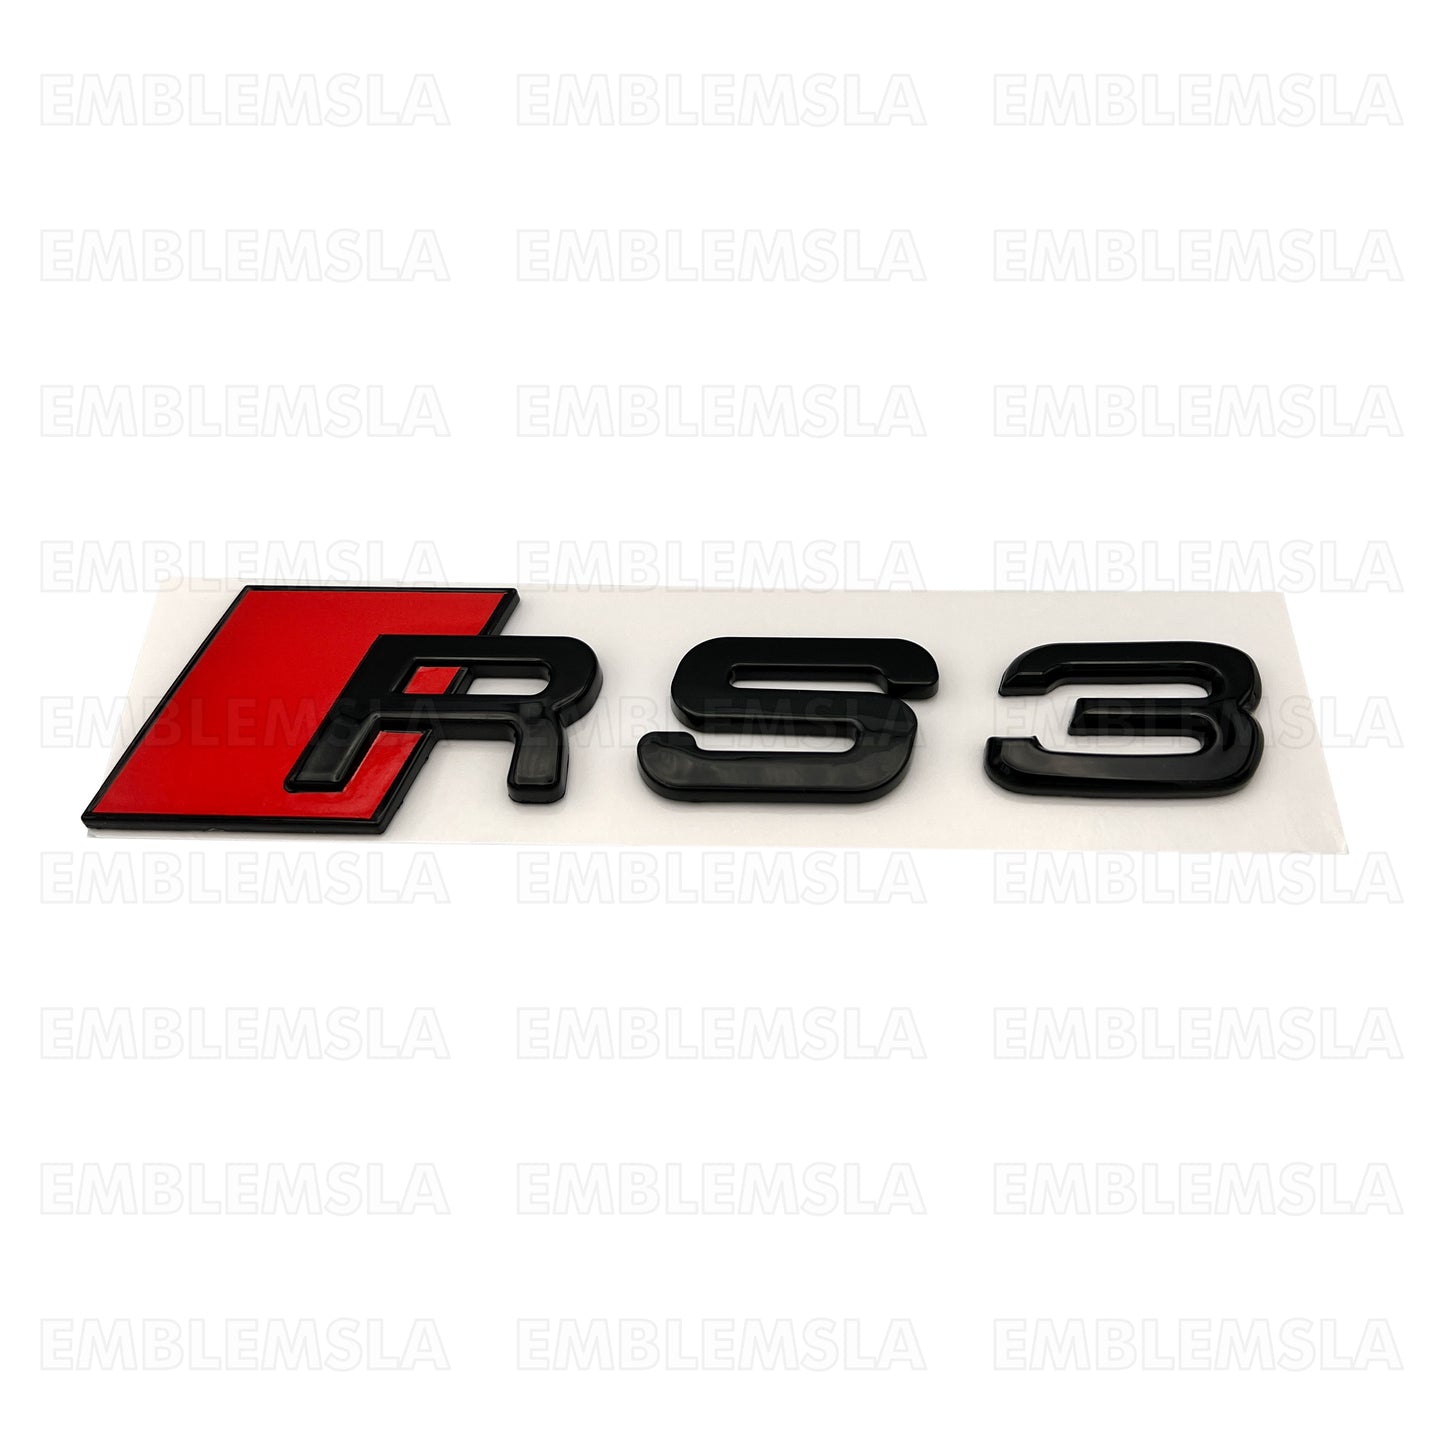 Audi RS3 Gloss Black Emblem 3D Badge Rear Trunk Tailgate for Audi RS3 S3 Logo A3